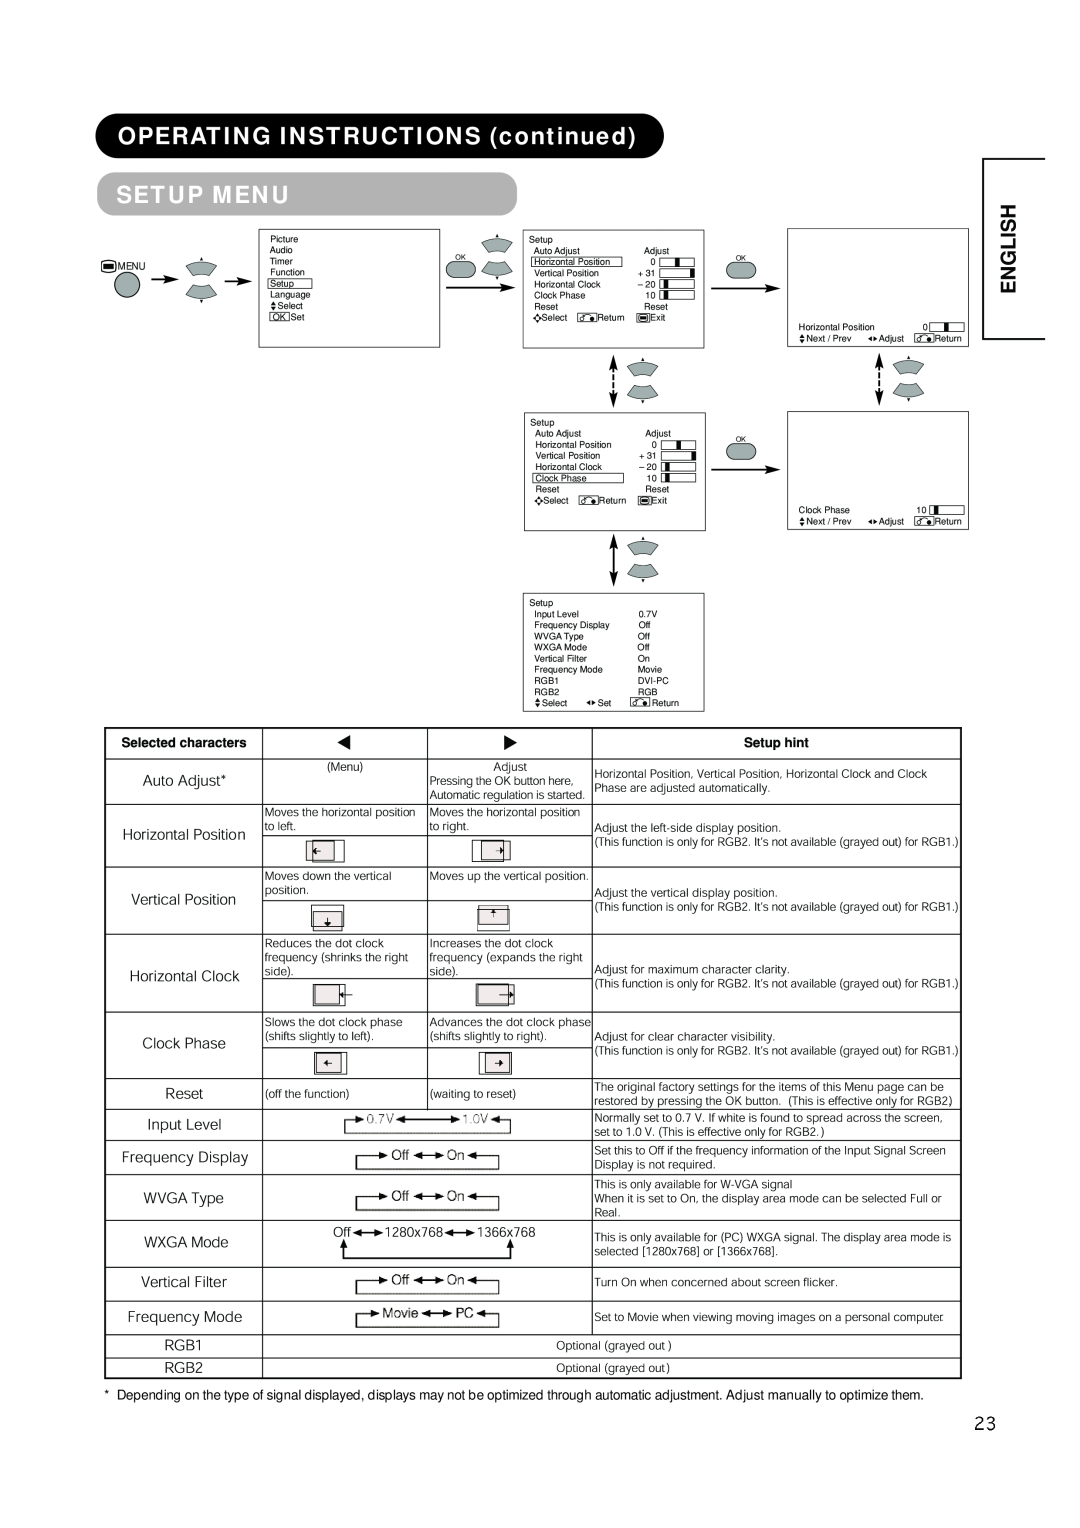 Hitachi PW1A user manual OPERATING INSTRUCTIONS continued SETUP MENU, English 